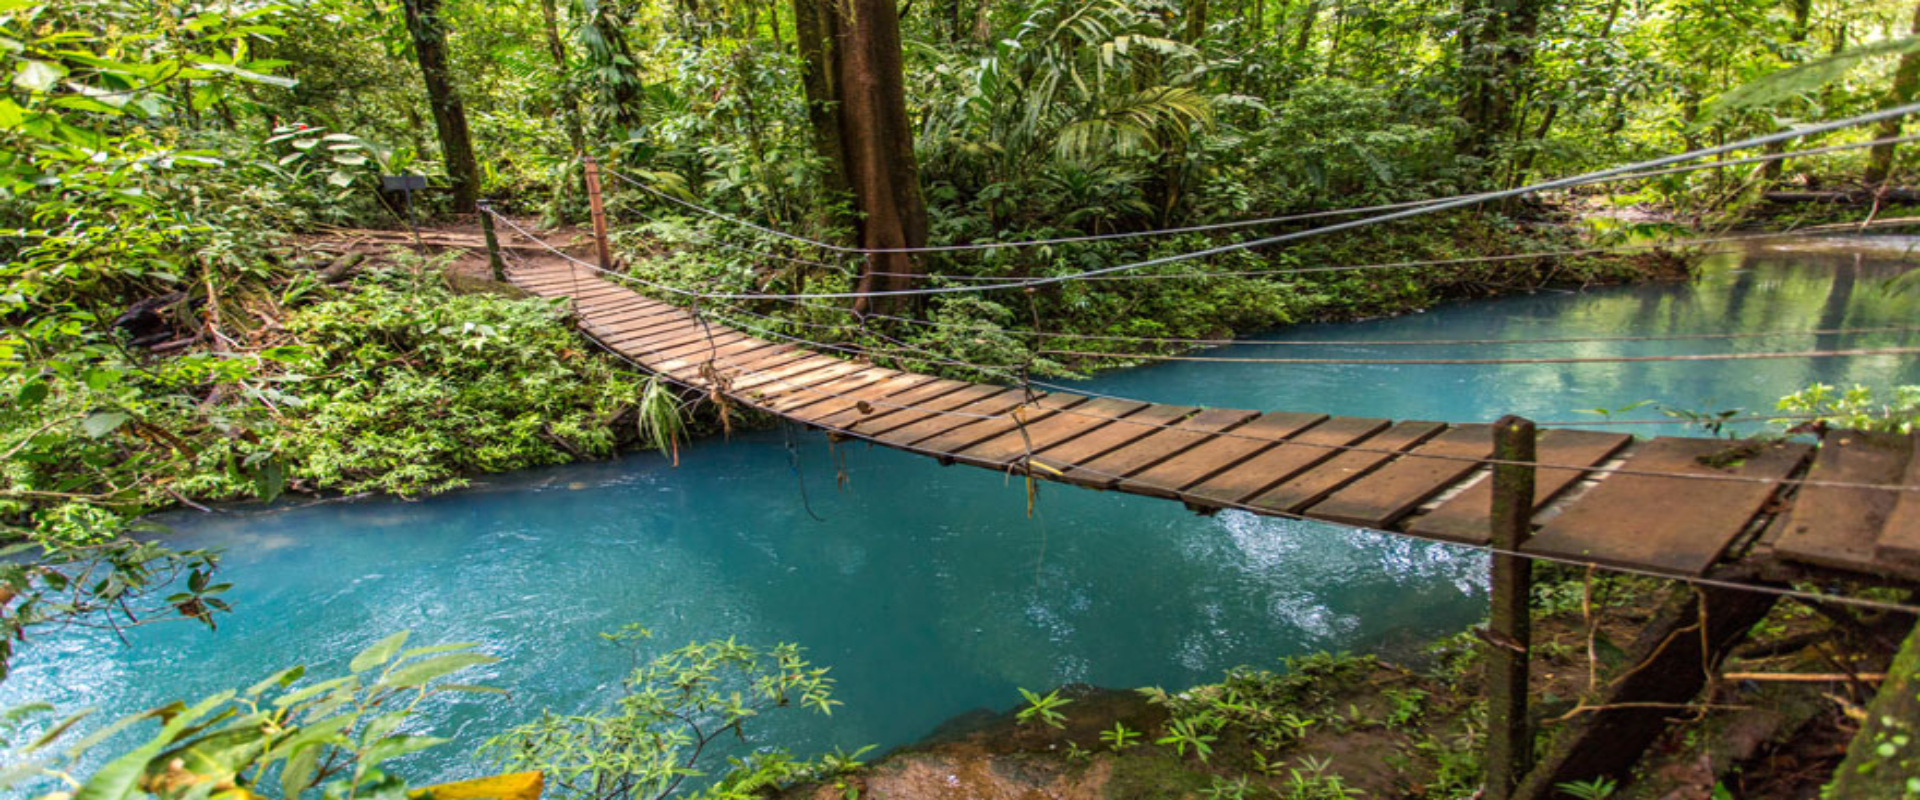 Caminata al Río Celeste y Volcán Tenorio  | Costa Rica Jade Tours